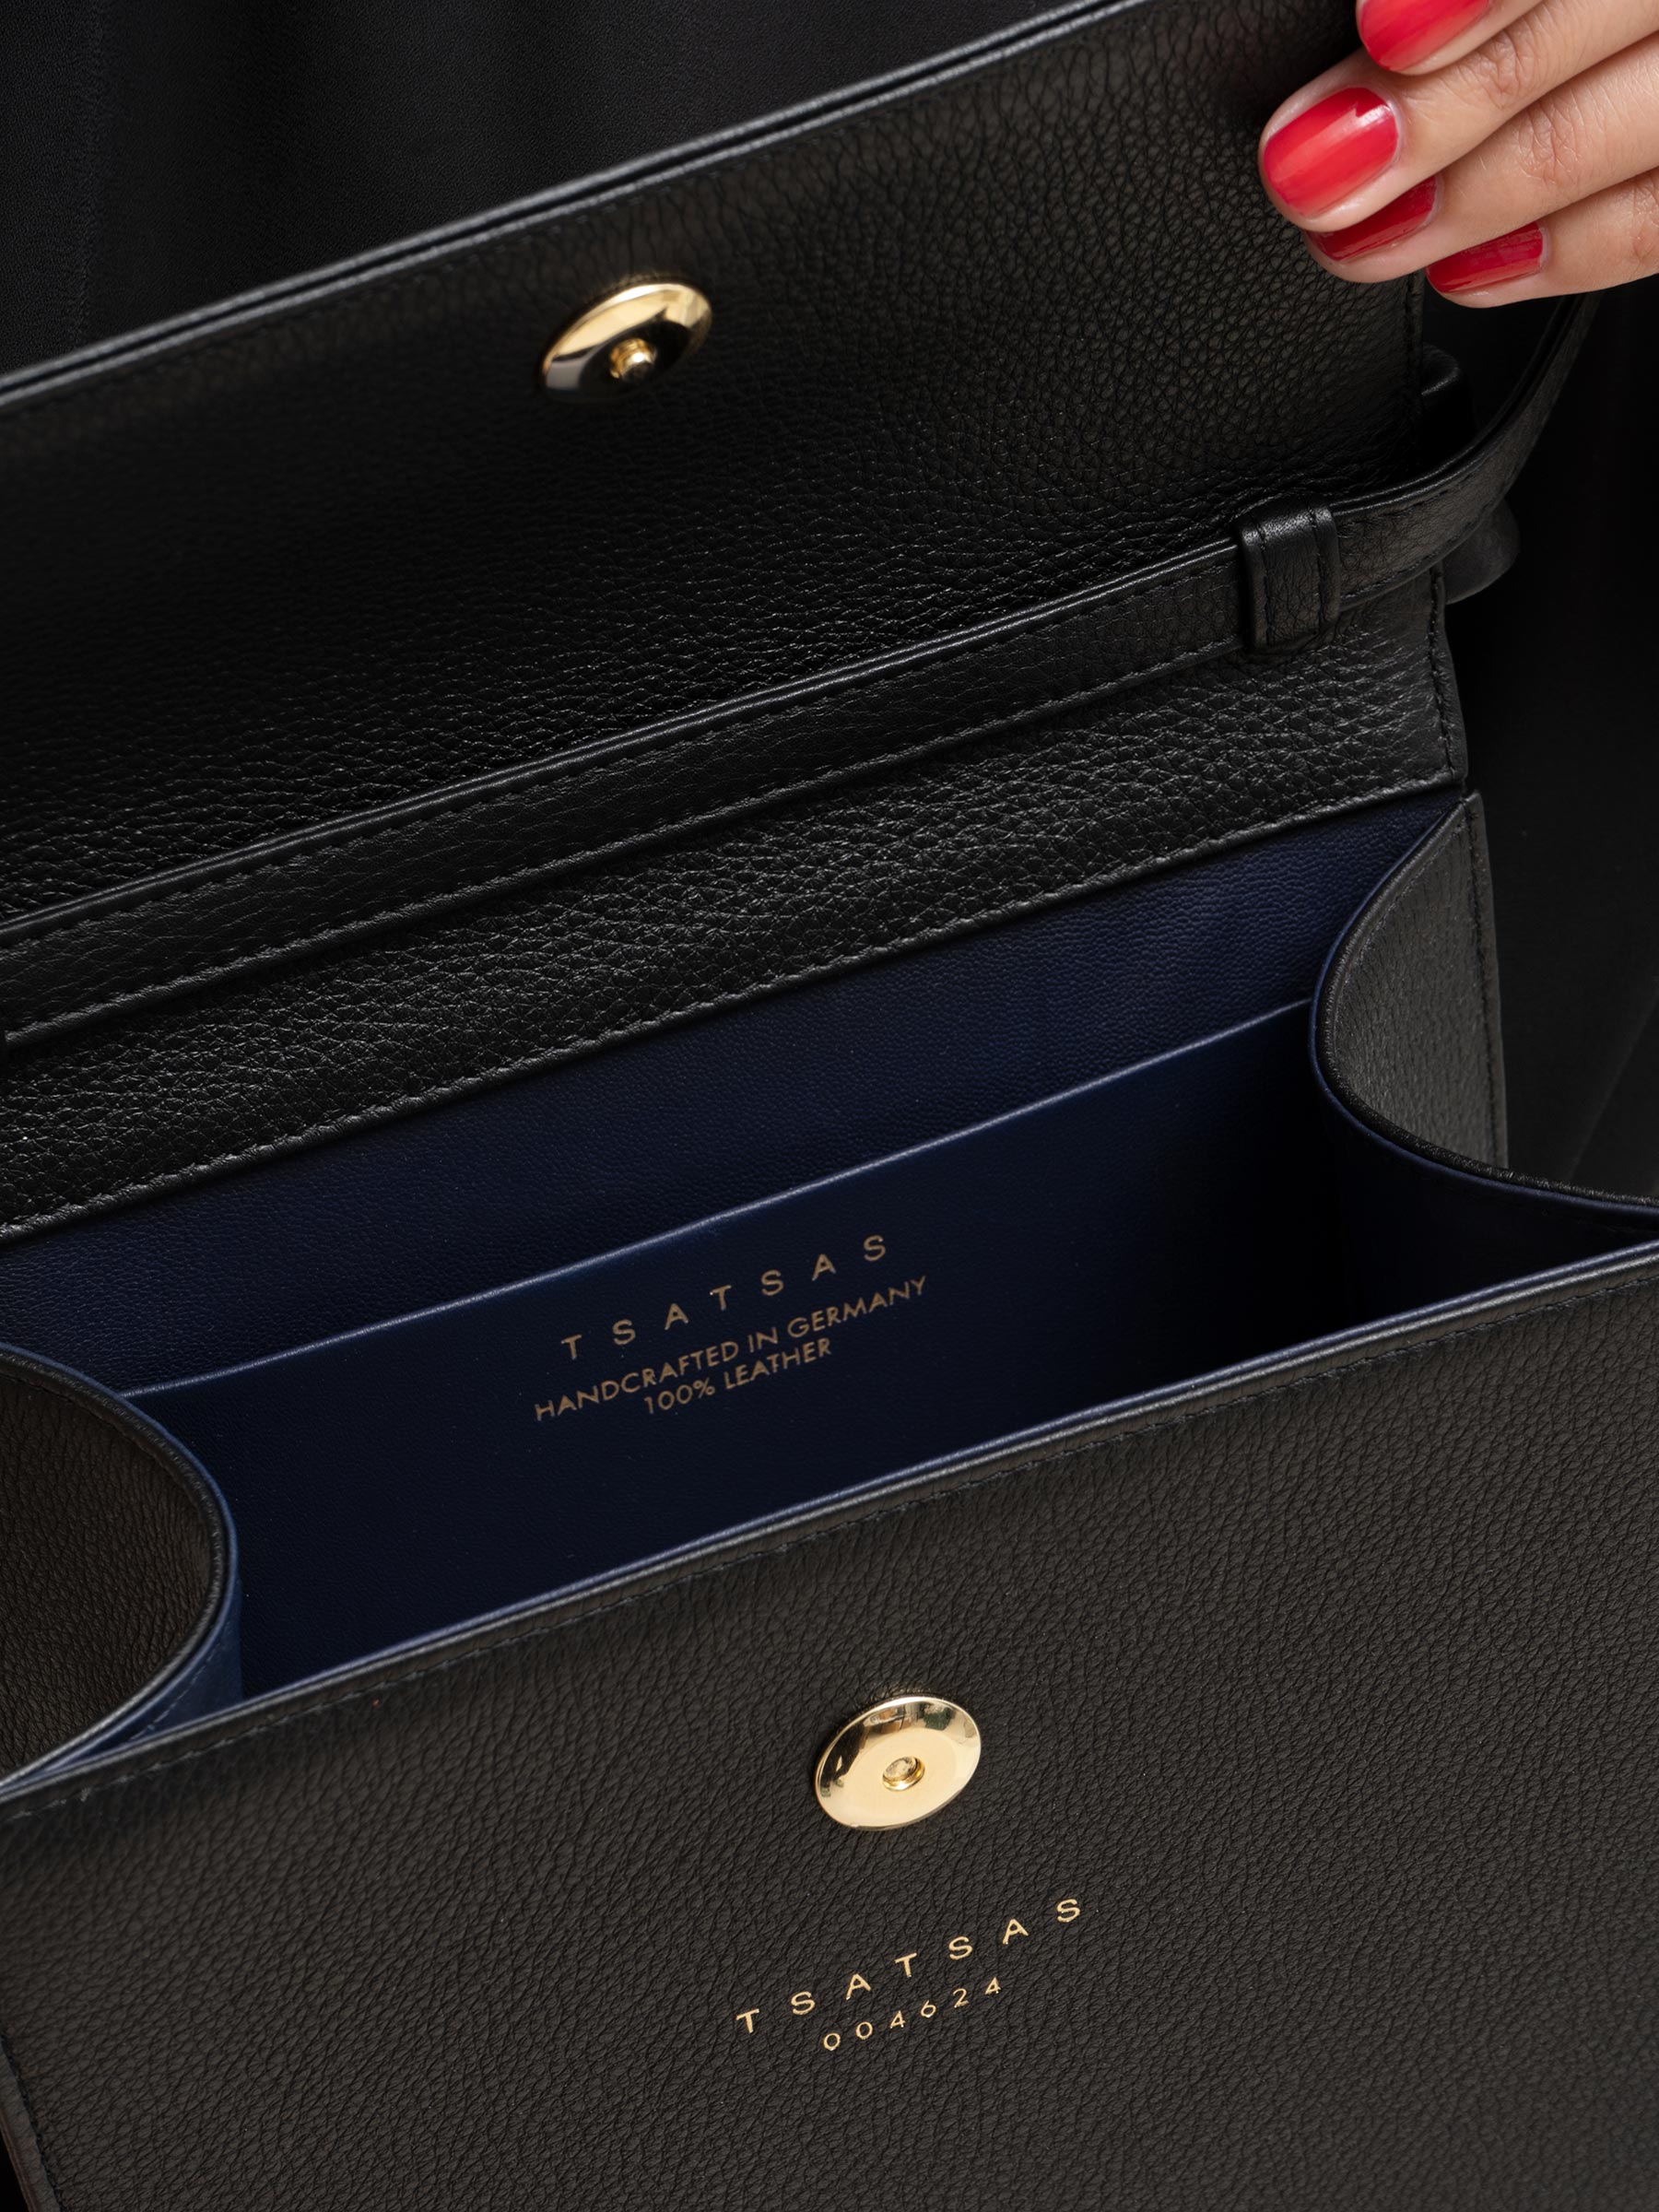 RHEI top handle bag in black calfskin leather | TSATSAS